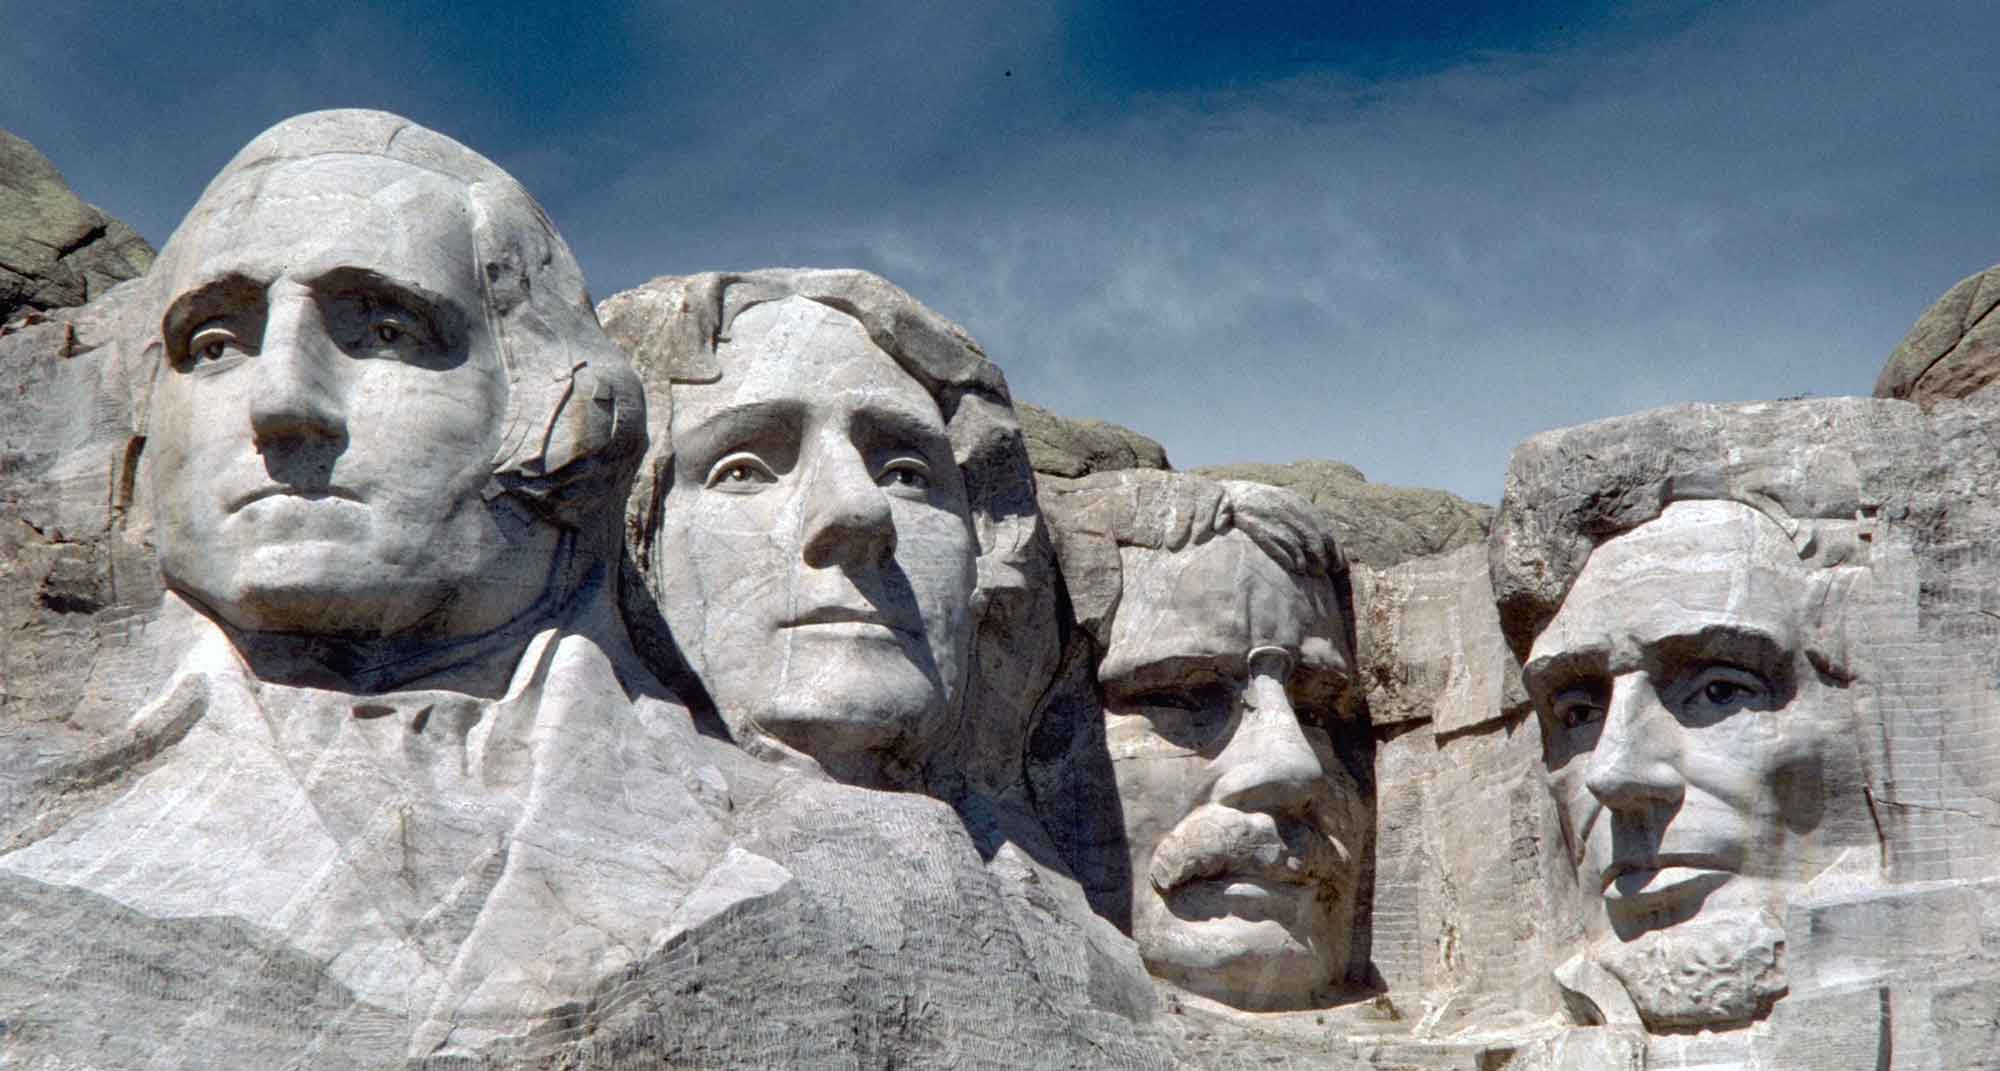 Creativity British Accents and Mount Rushmore